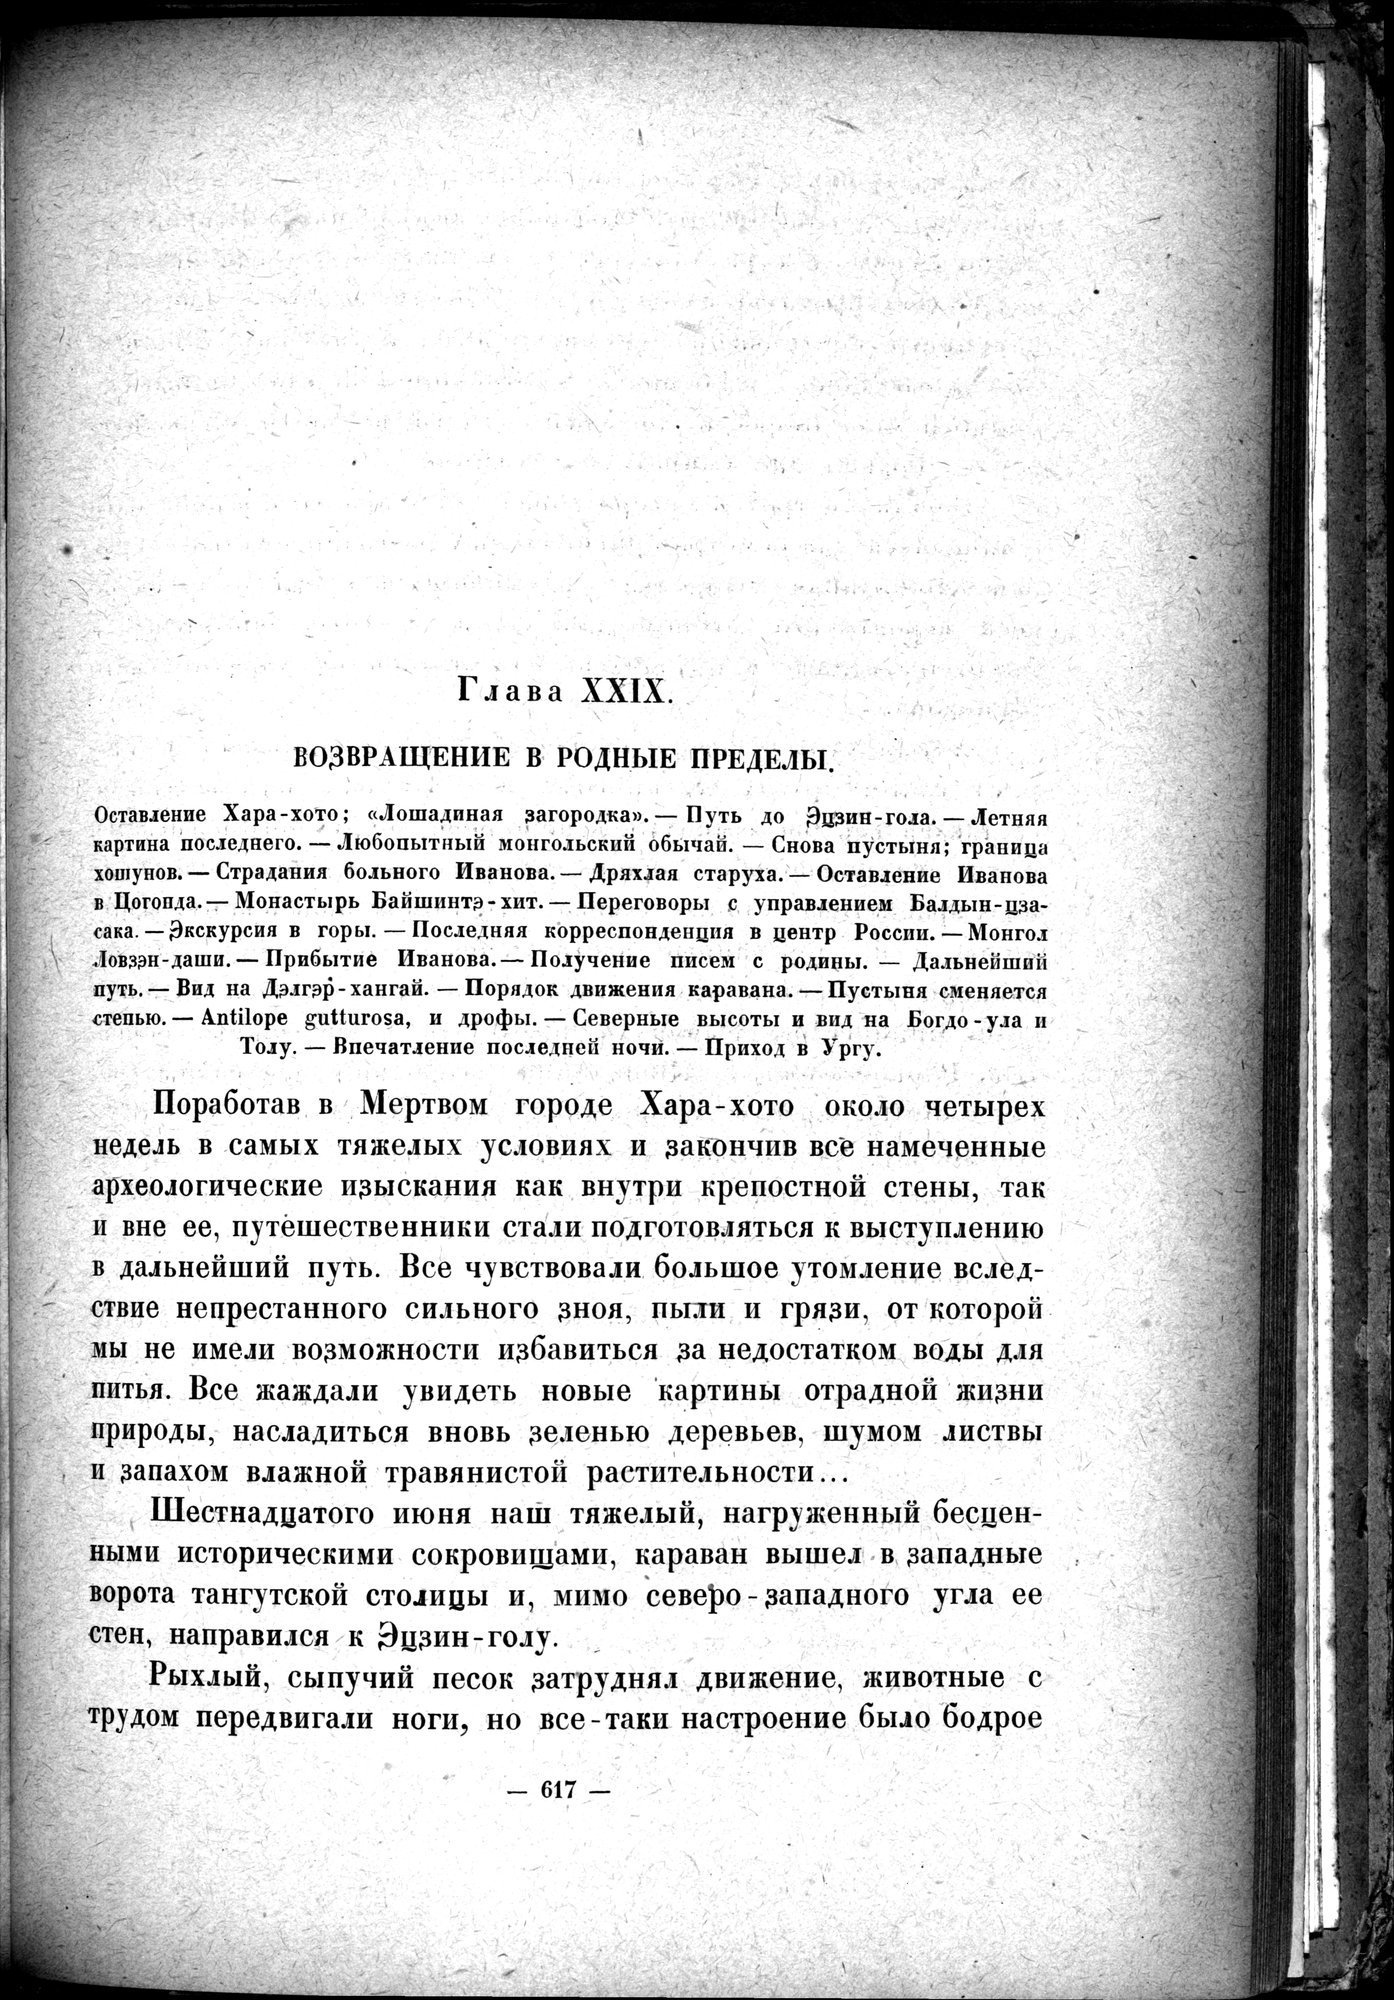 Mongoliya i Amdo i mertby gorod Khara-Khoto : vol.1 / Page 707 (Grayscale High Resolution Image)